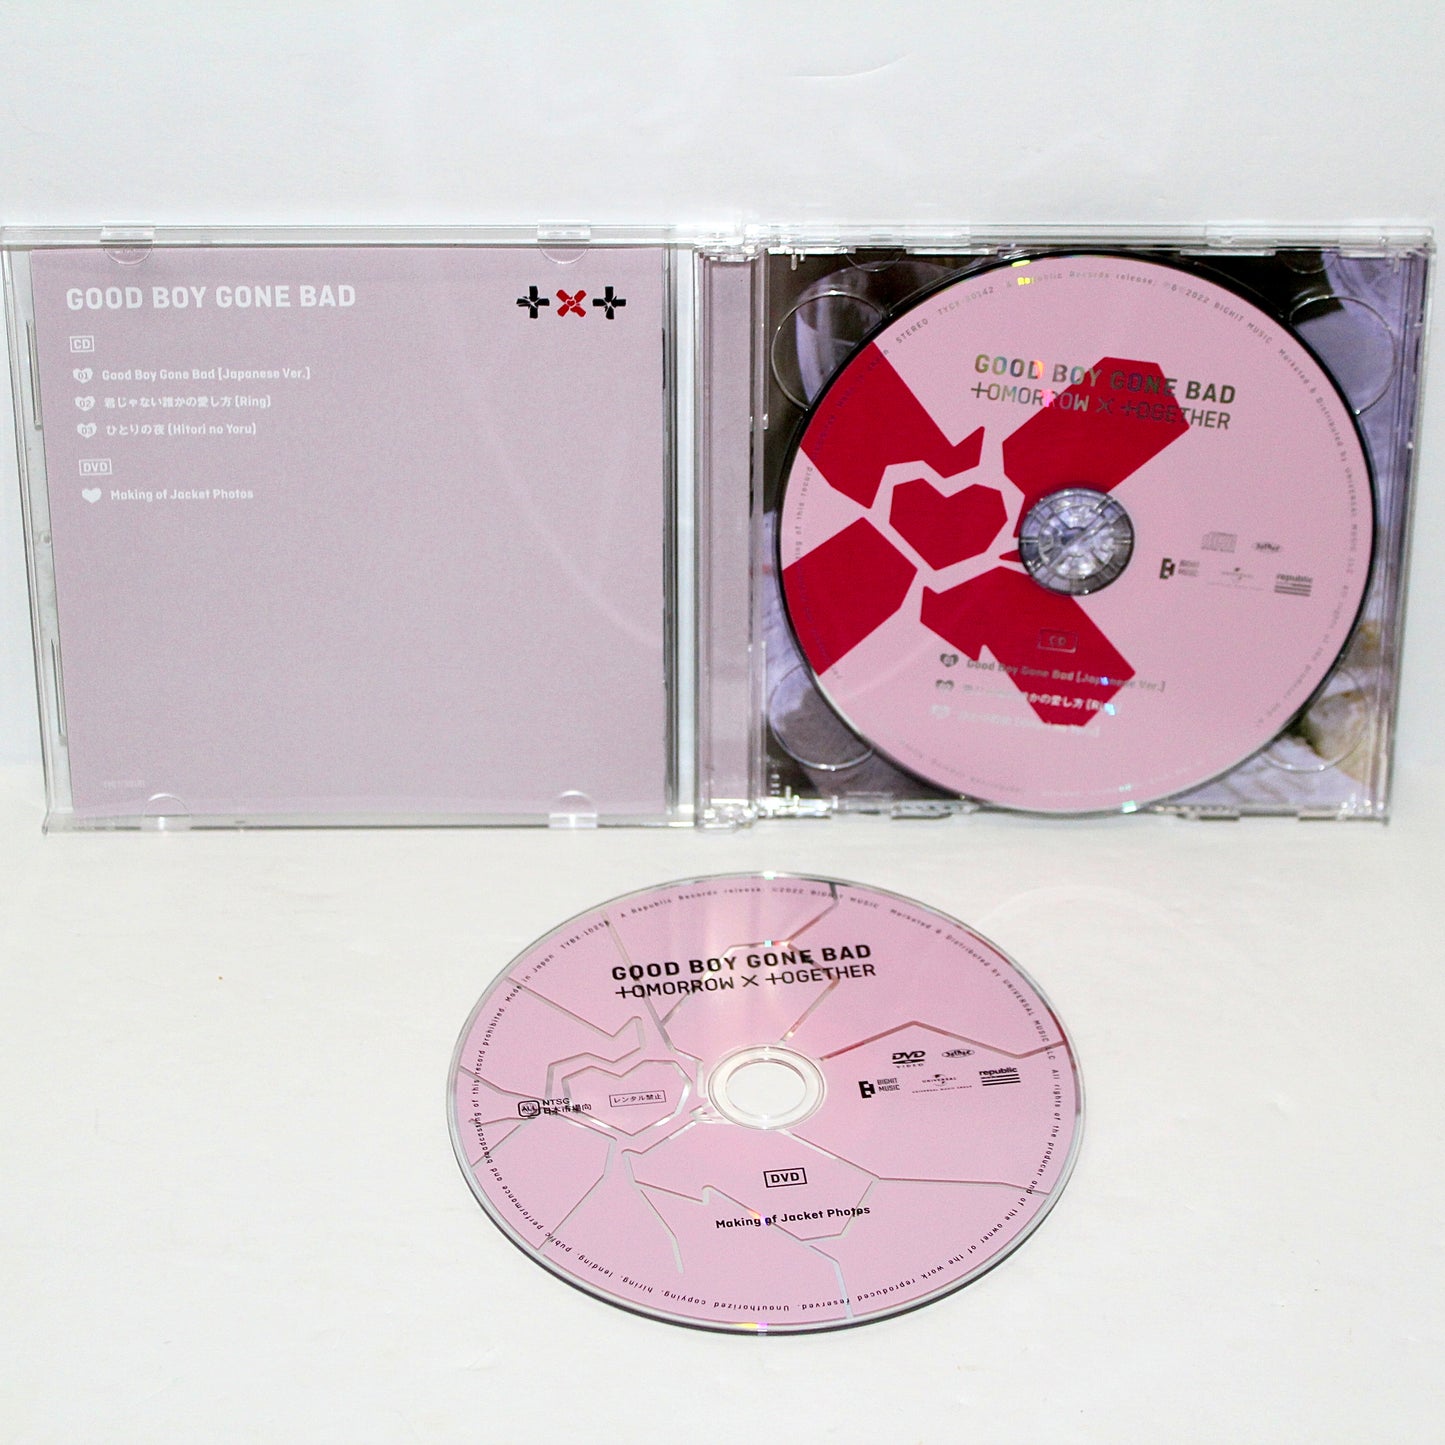 TXT 3rd Japanese Single: GOOD BOY GONE BAD - Limited Edition B Ver. | Jewel Case